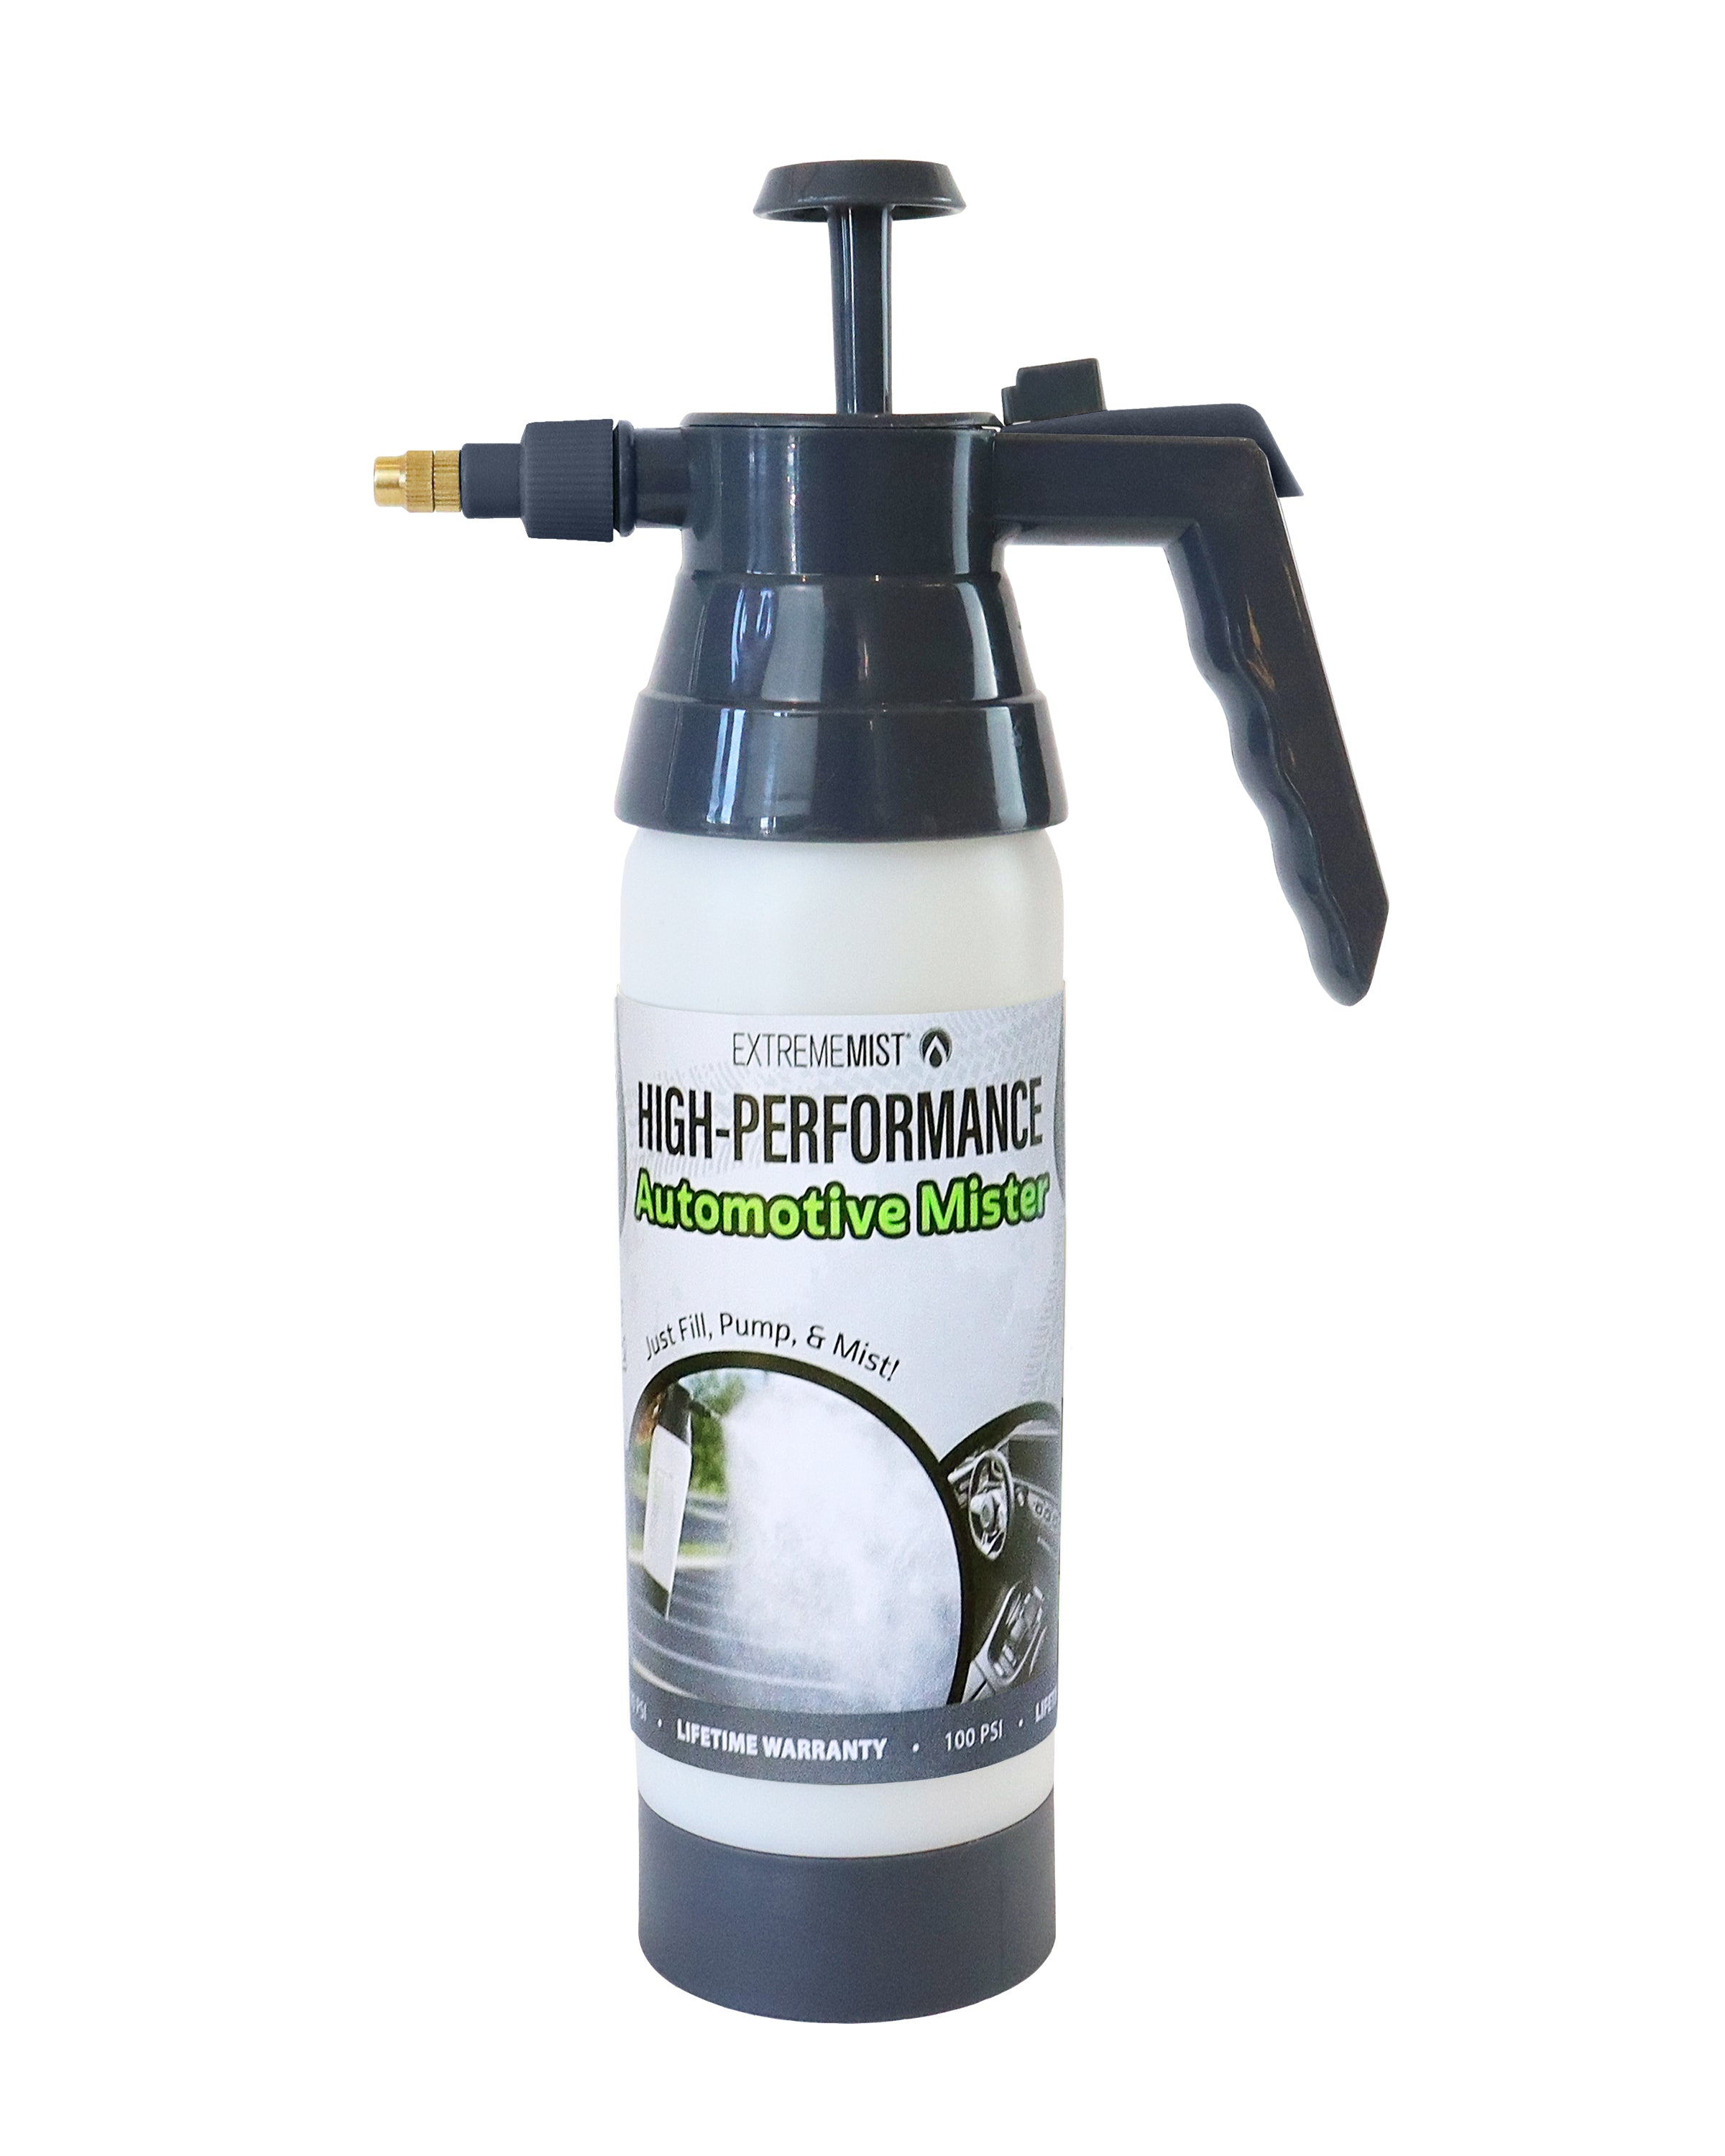 automotive mister pump-up sprayer with label